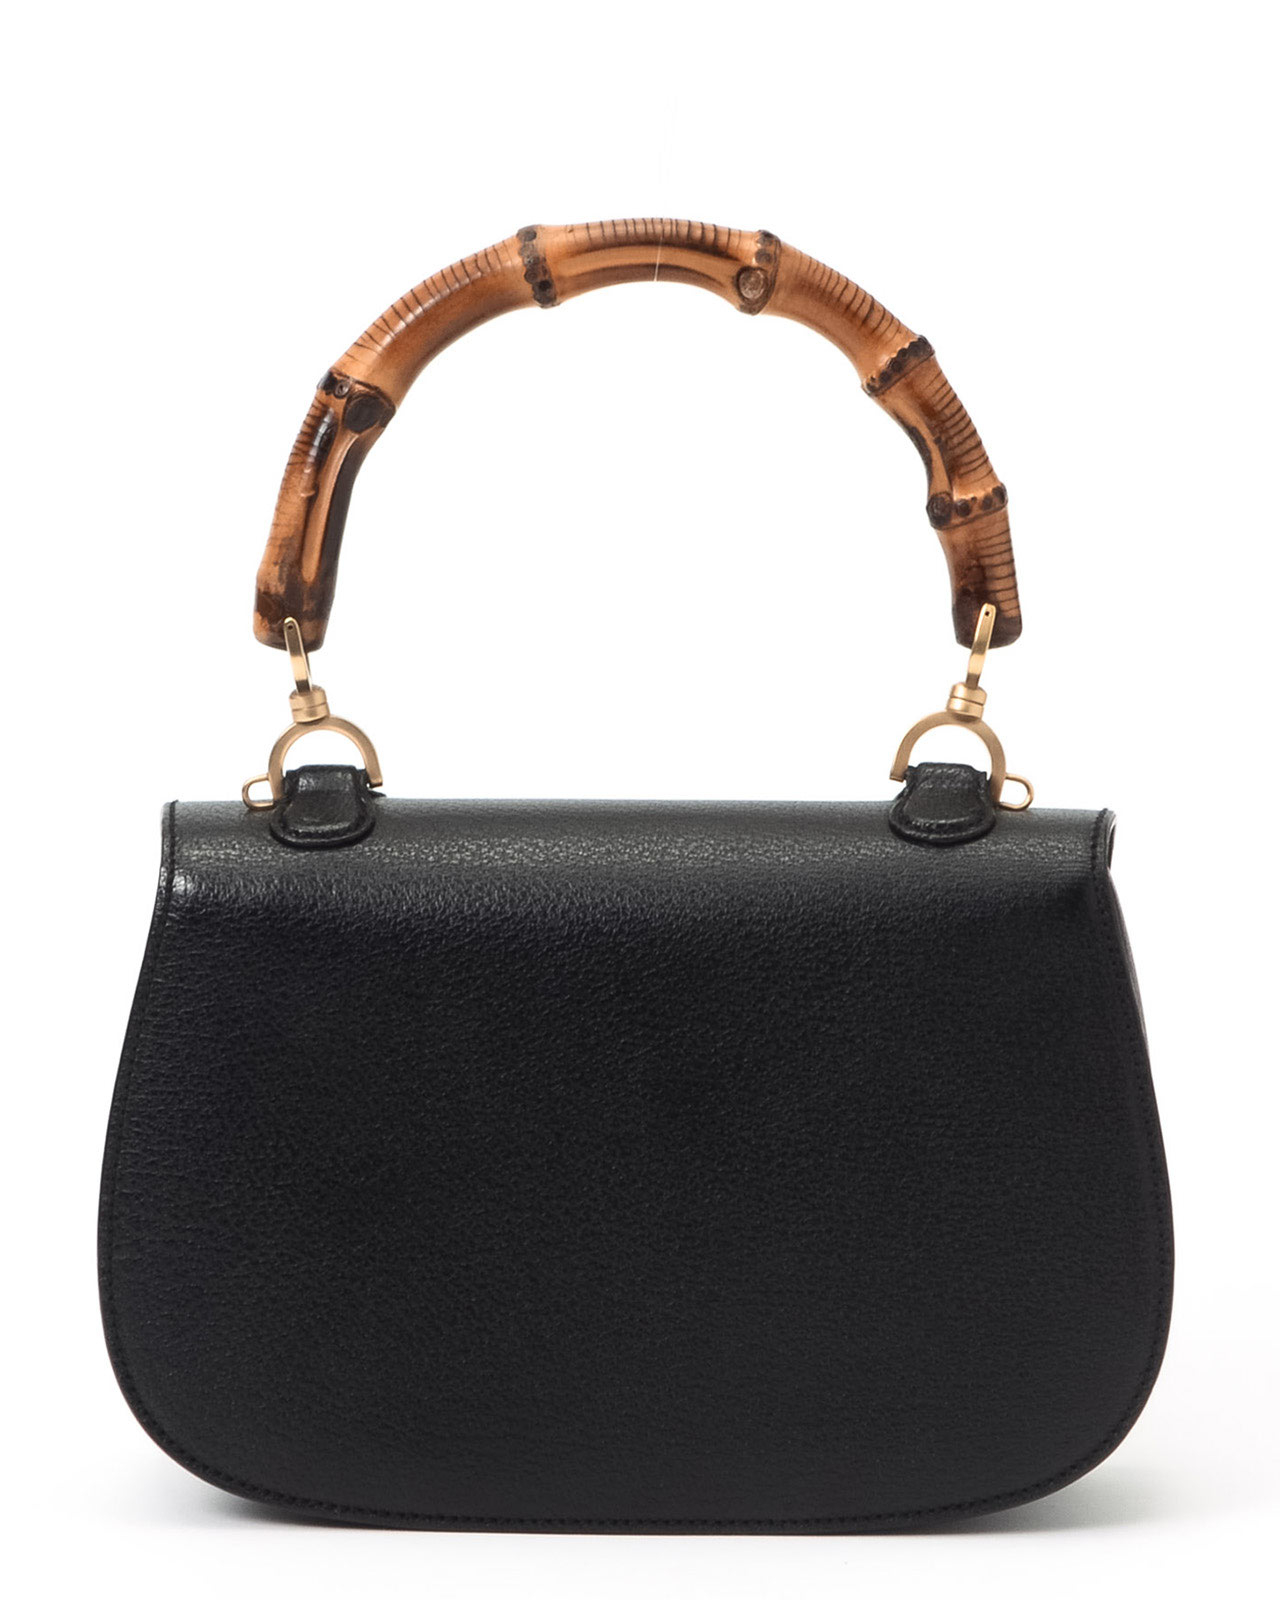 Lyst - Gucci Bamboo Handle Handbag in Black